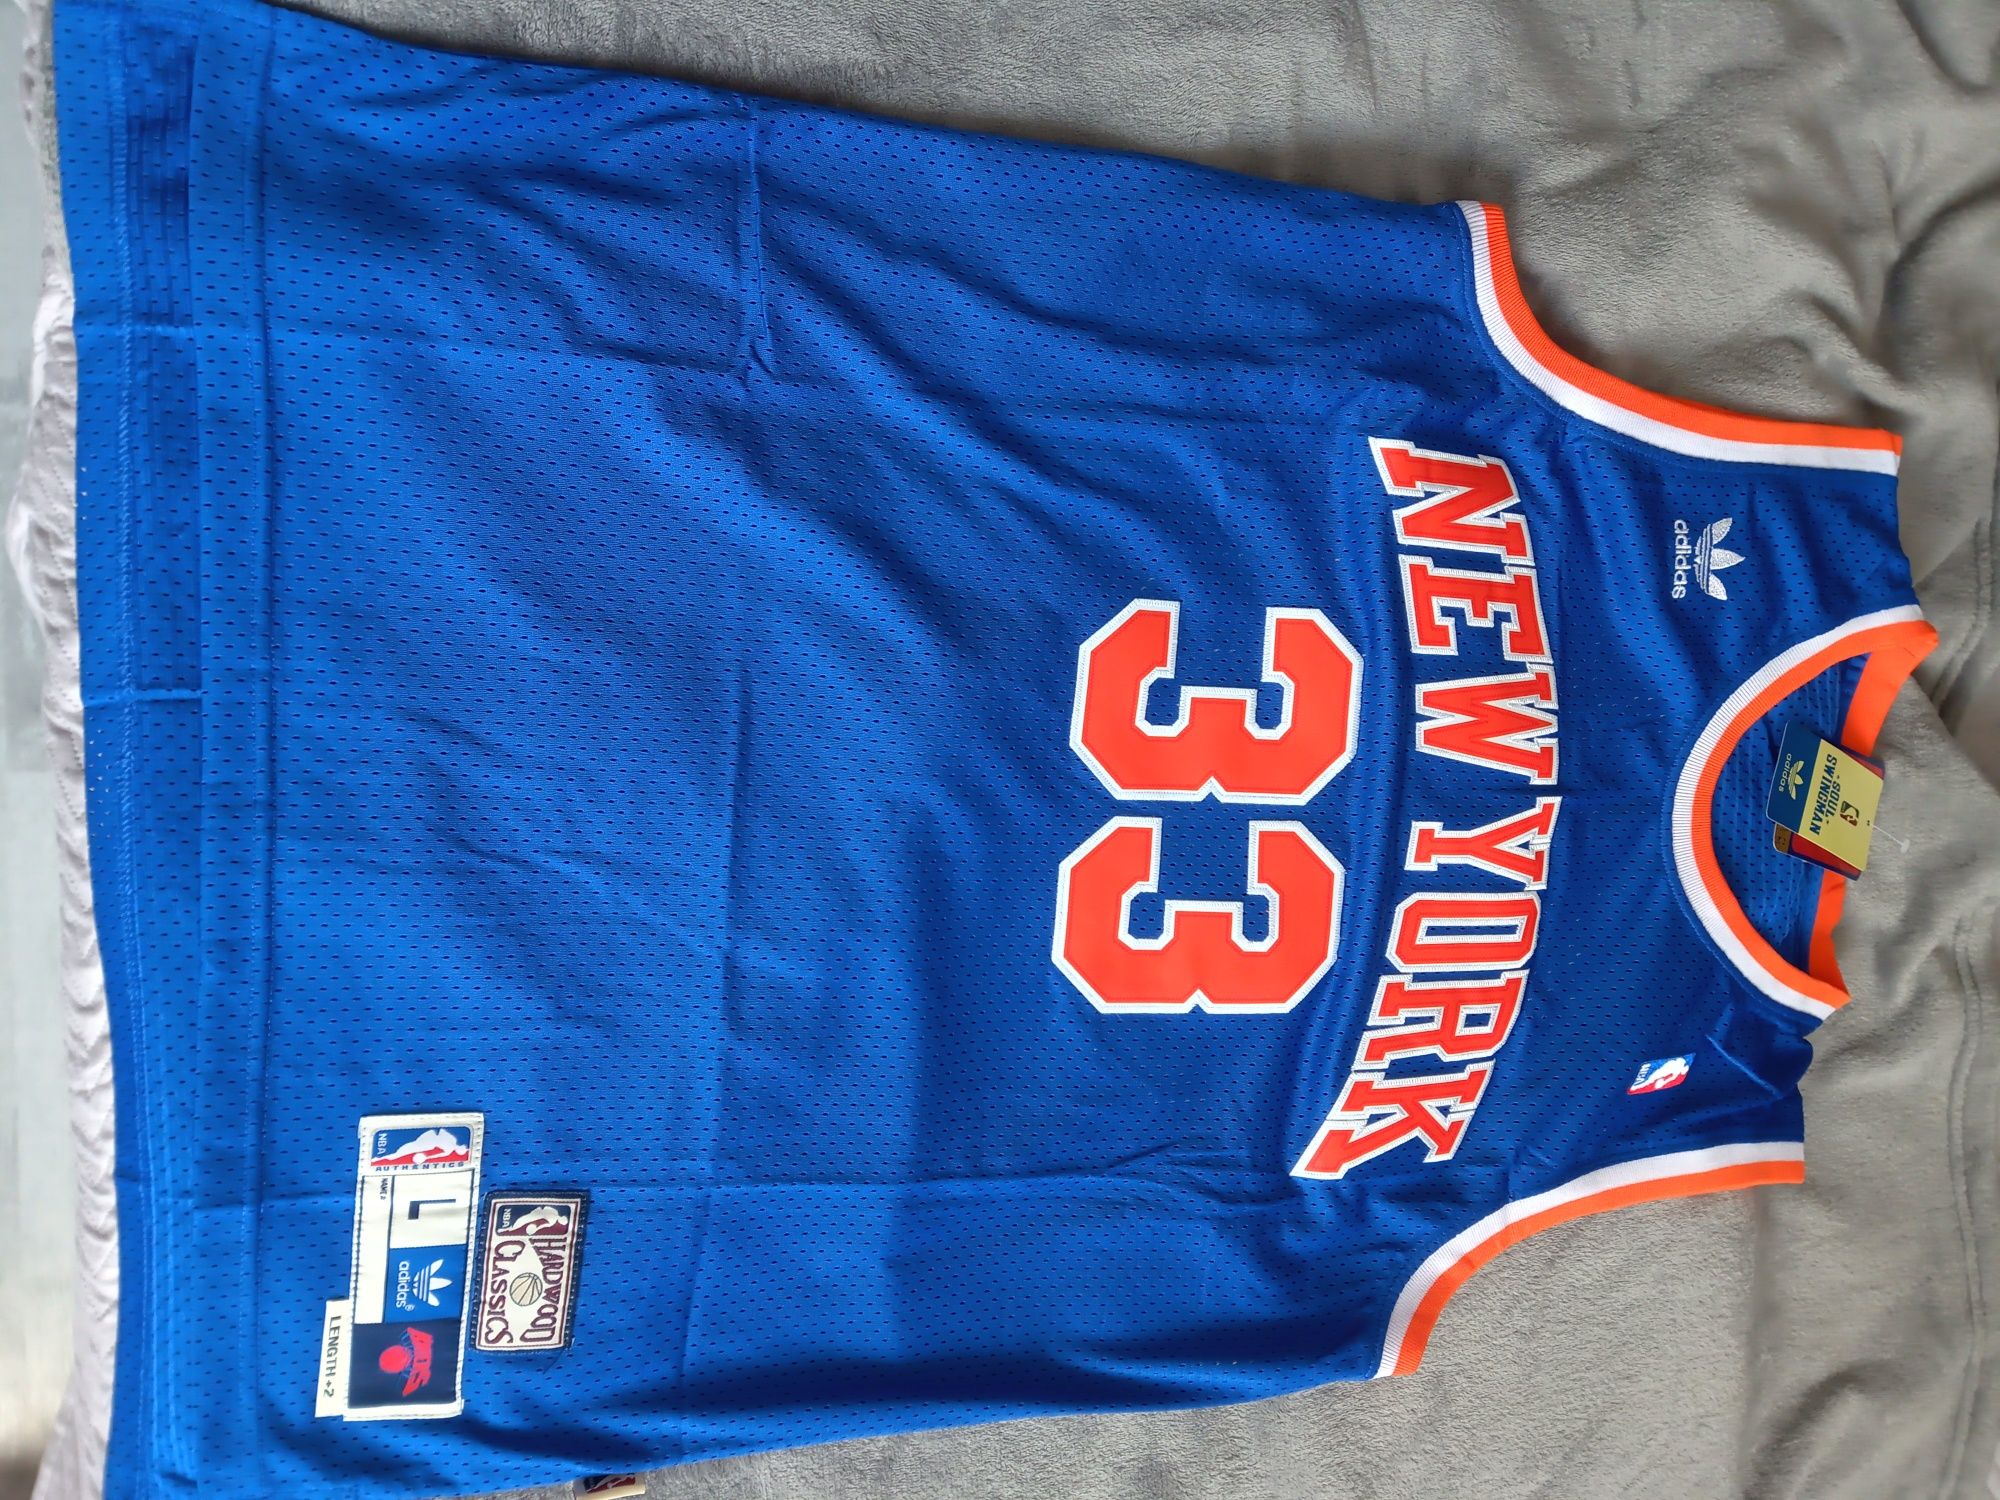 Ewing 33 New York Knicks